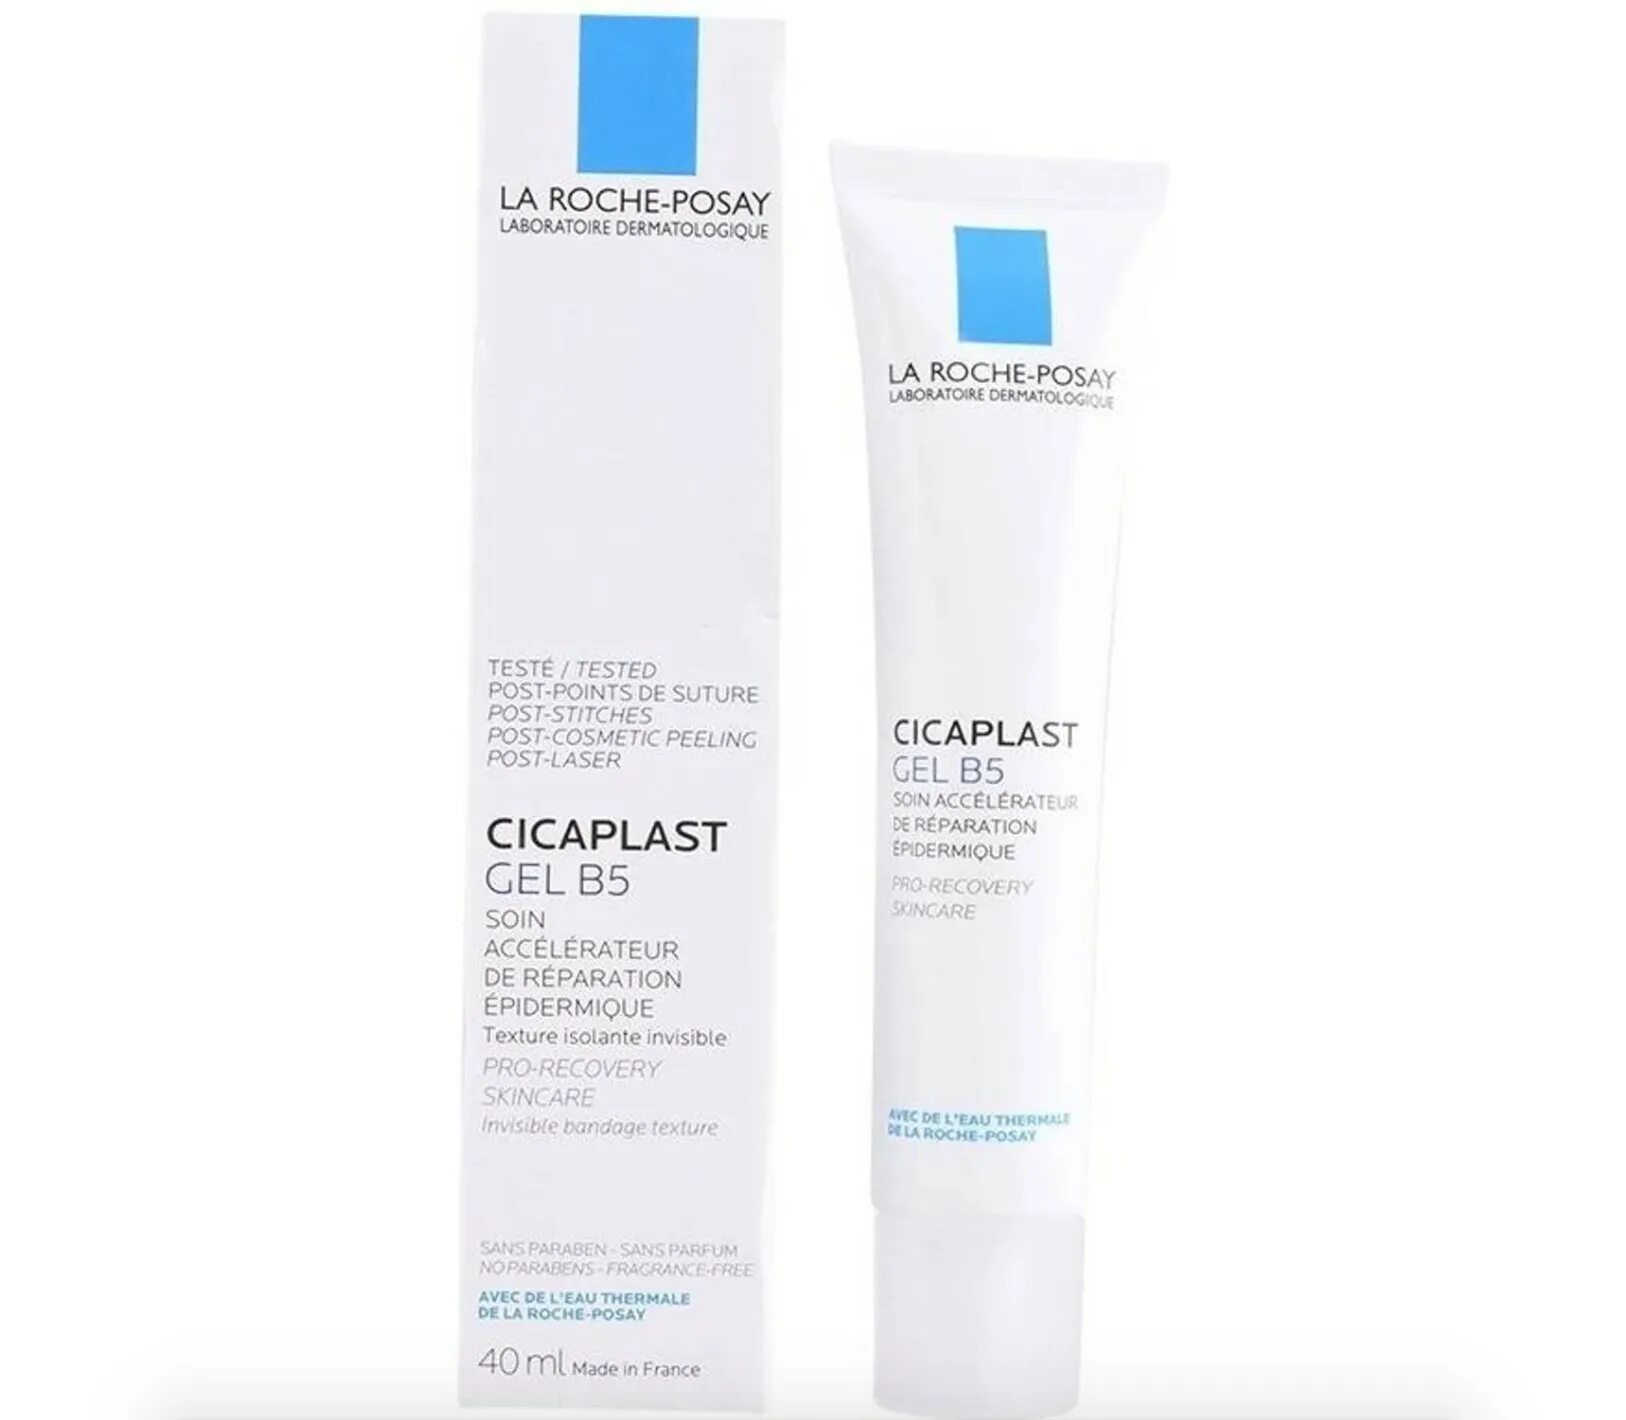 La Roche-Posay Cicaplast Gel b5. La Roche-Posay Pro Recovery Skincare. Ля Рош цикапласт гель b5 40мл. Гель для лица la Roche Posay Cicaplast Gel b5 40 ml.